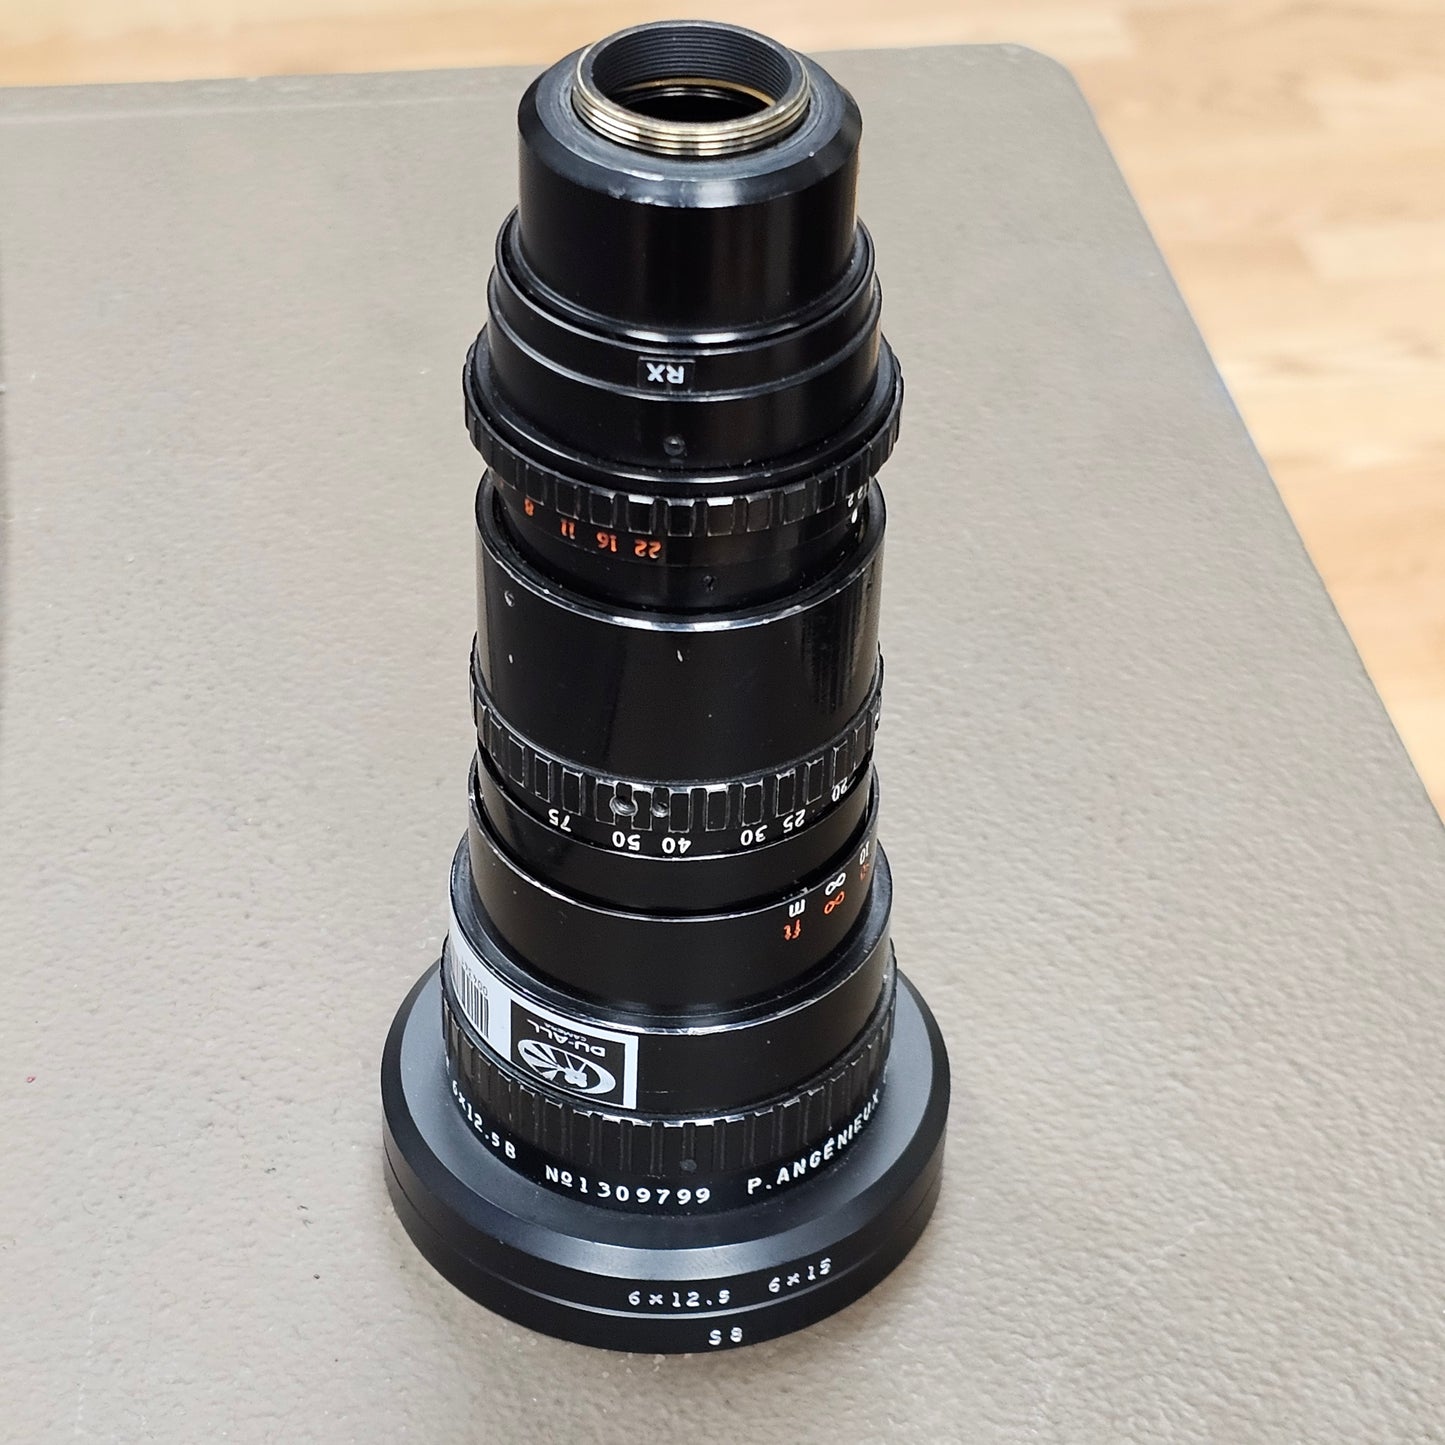 Angenieux 12.5-75mm T2.5 C-Mount Zoom lens RX Type 6x12.5B S# 1309799